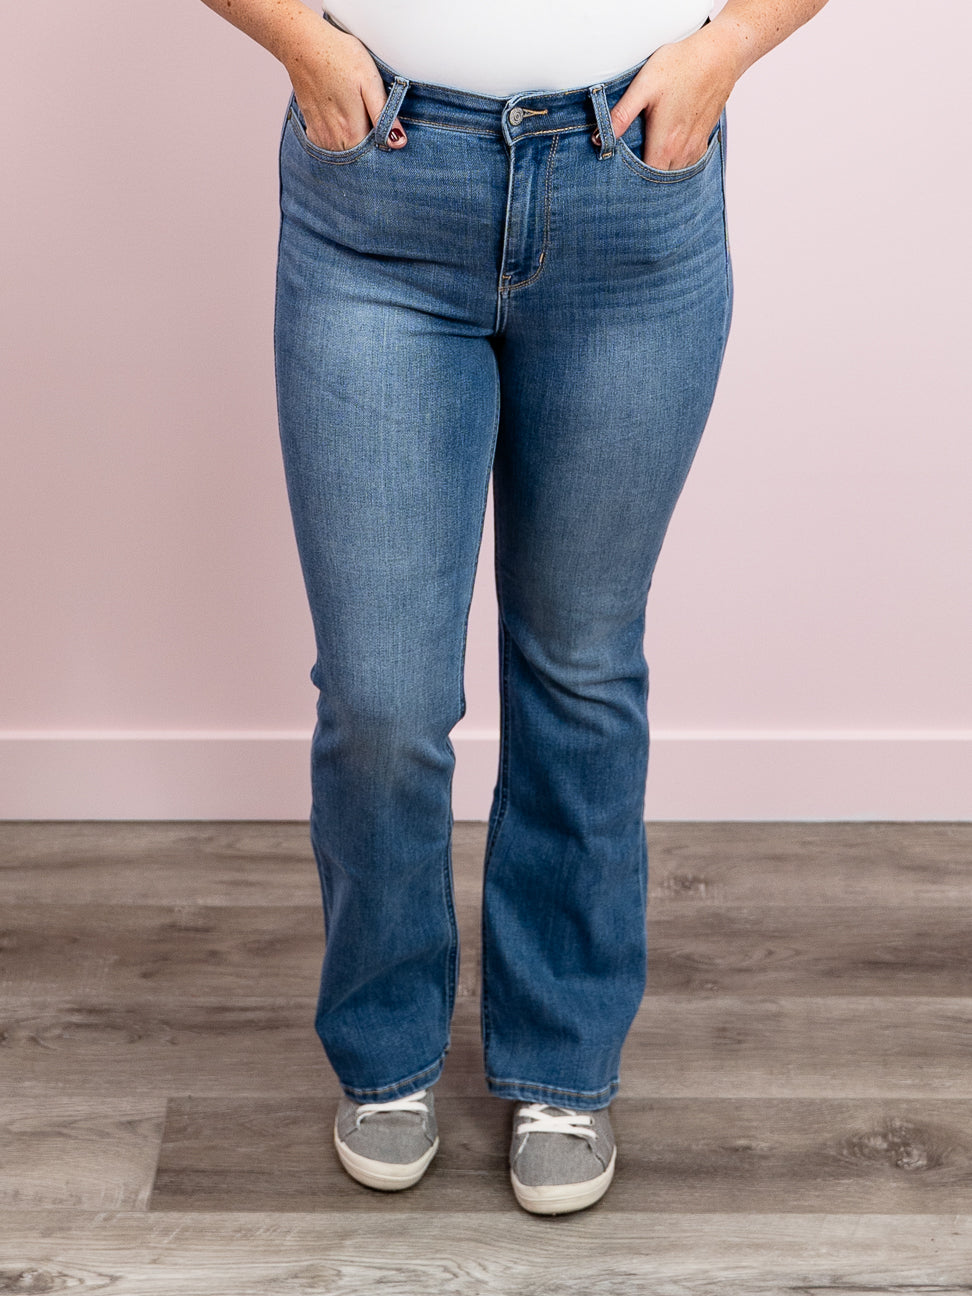 Judy Blue Flower Power High Waist Super Flare Jeans, By Alexa Rae Boutique